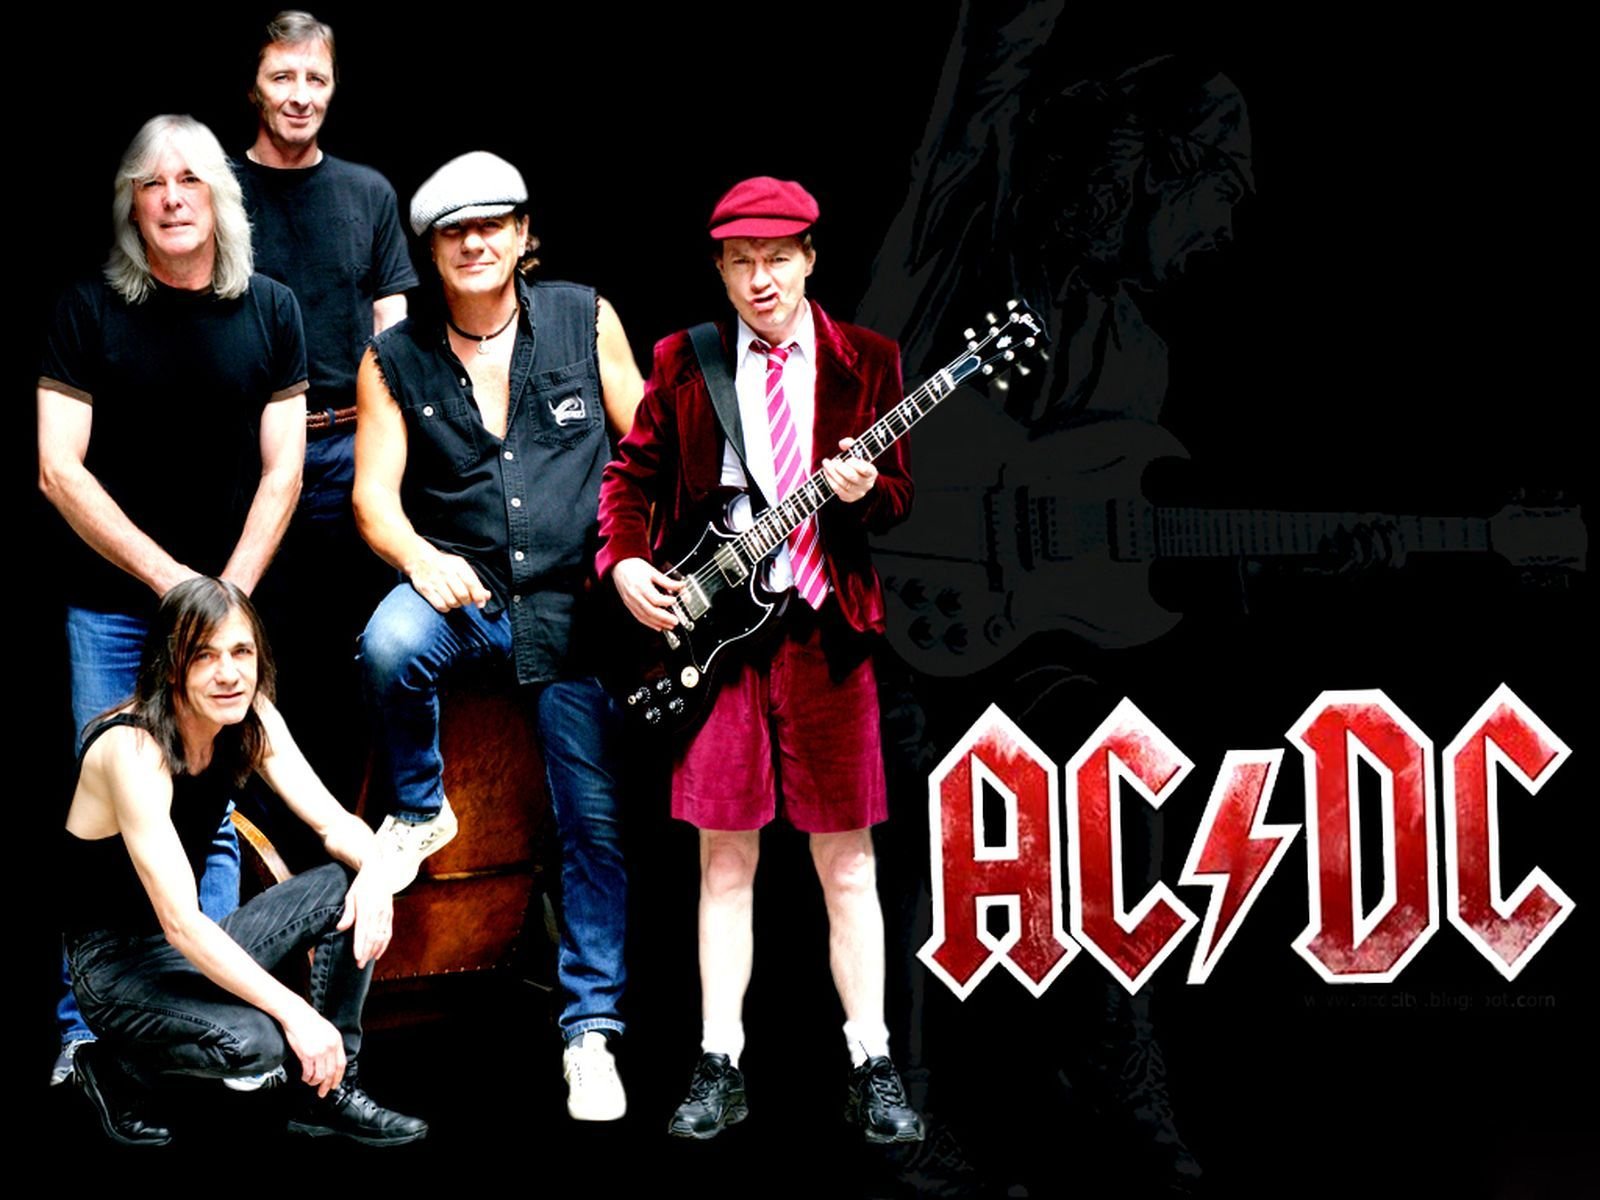 Angus Young guitarrista de AC/DC signo Aries